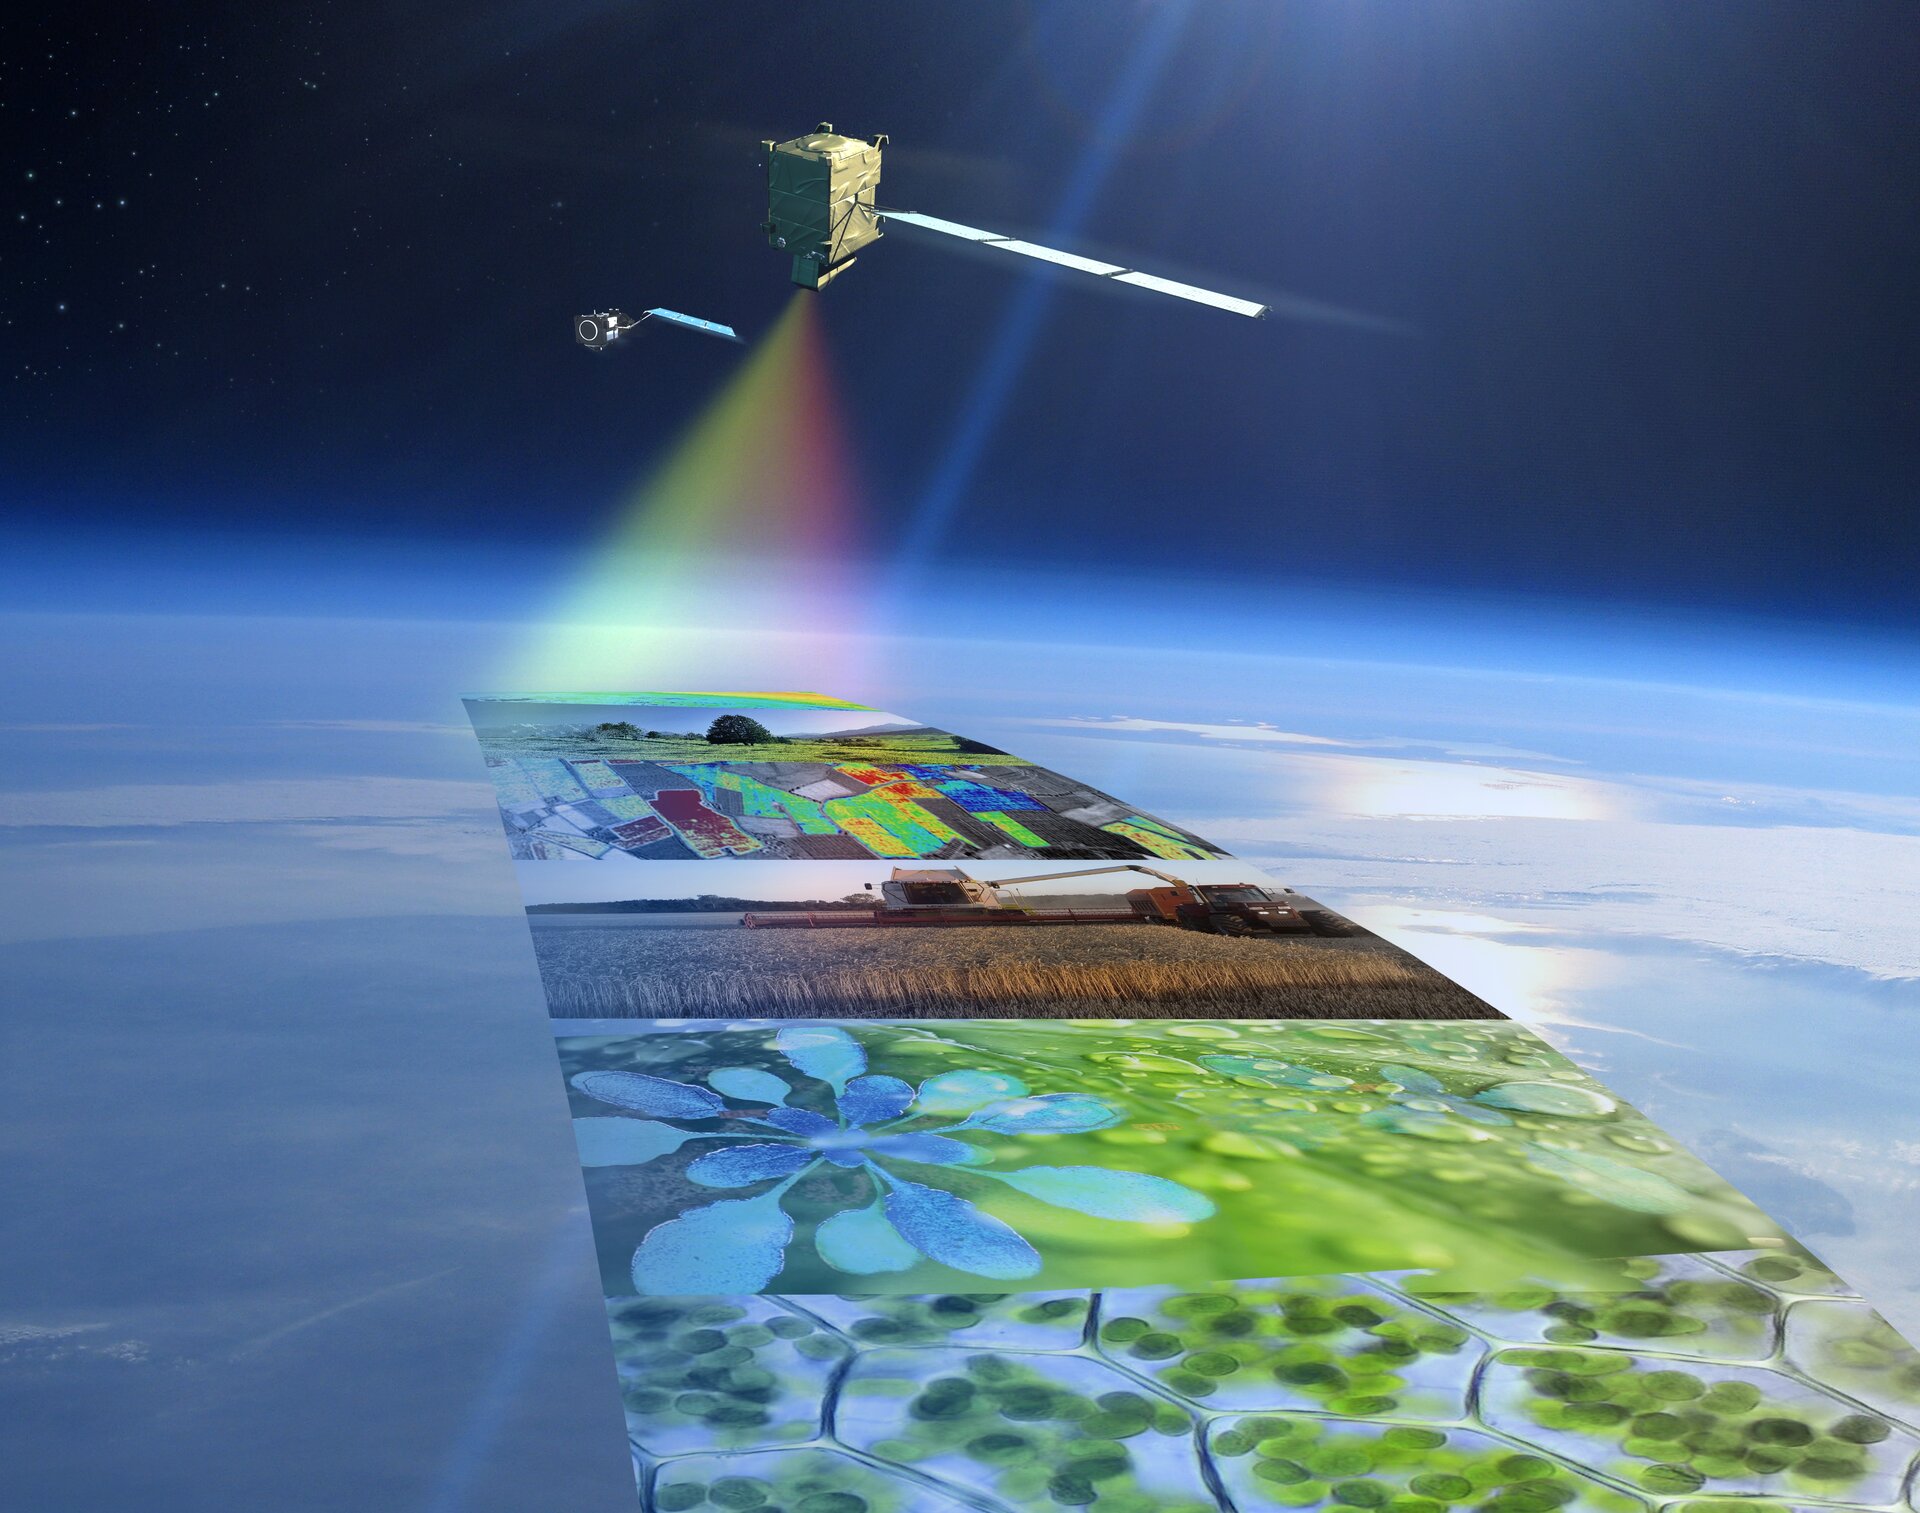 FLEX satellite illustration for Airbus Defence & Space